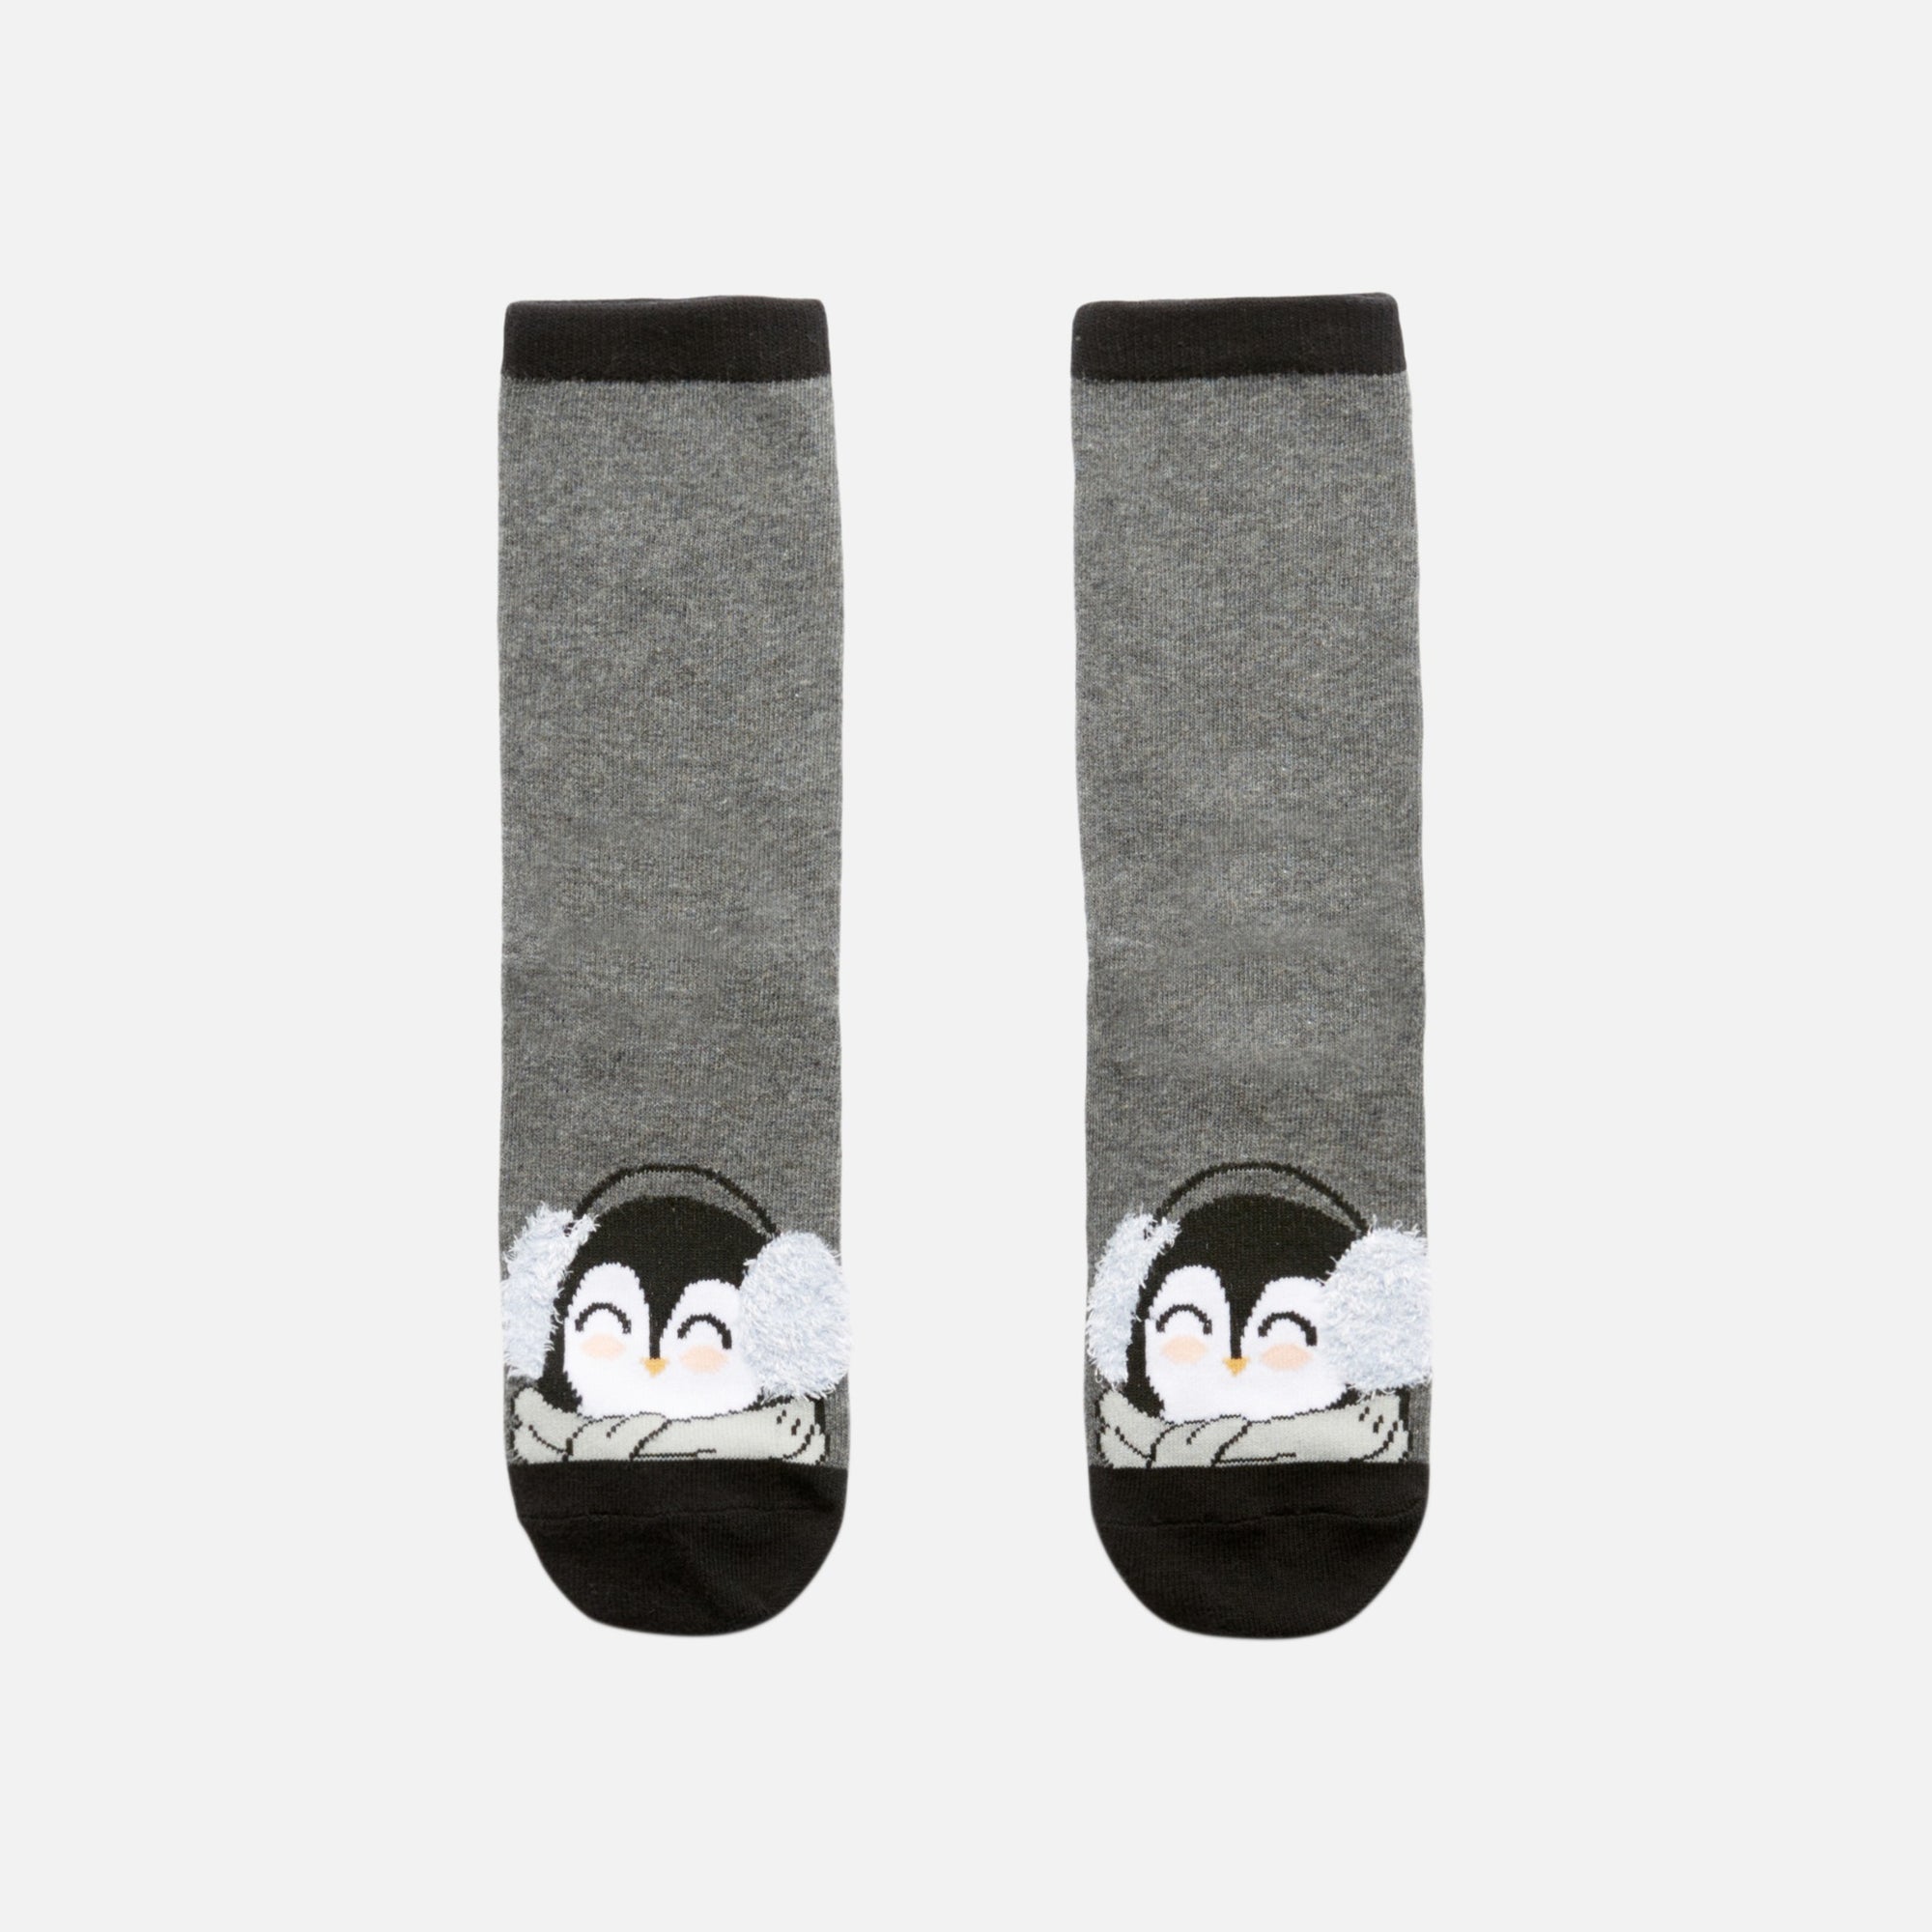 Dark grey socks with stripes and penguin